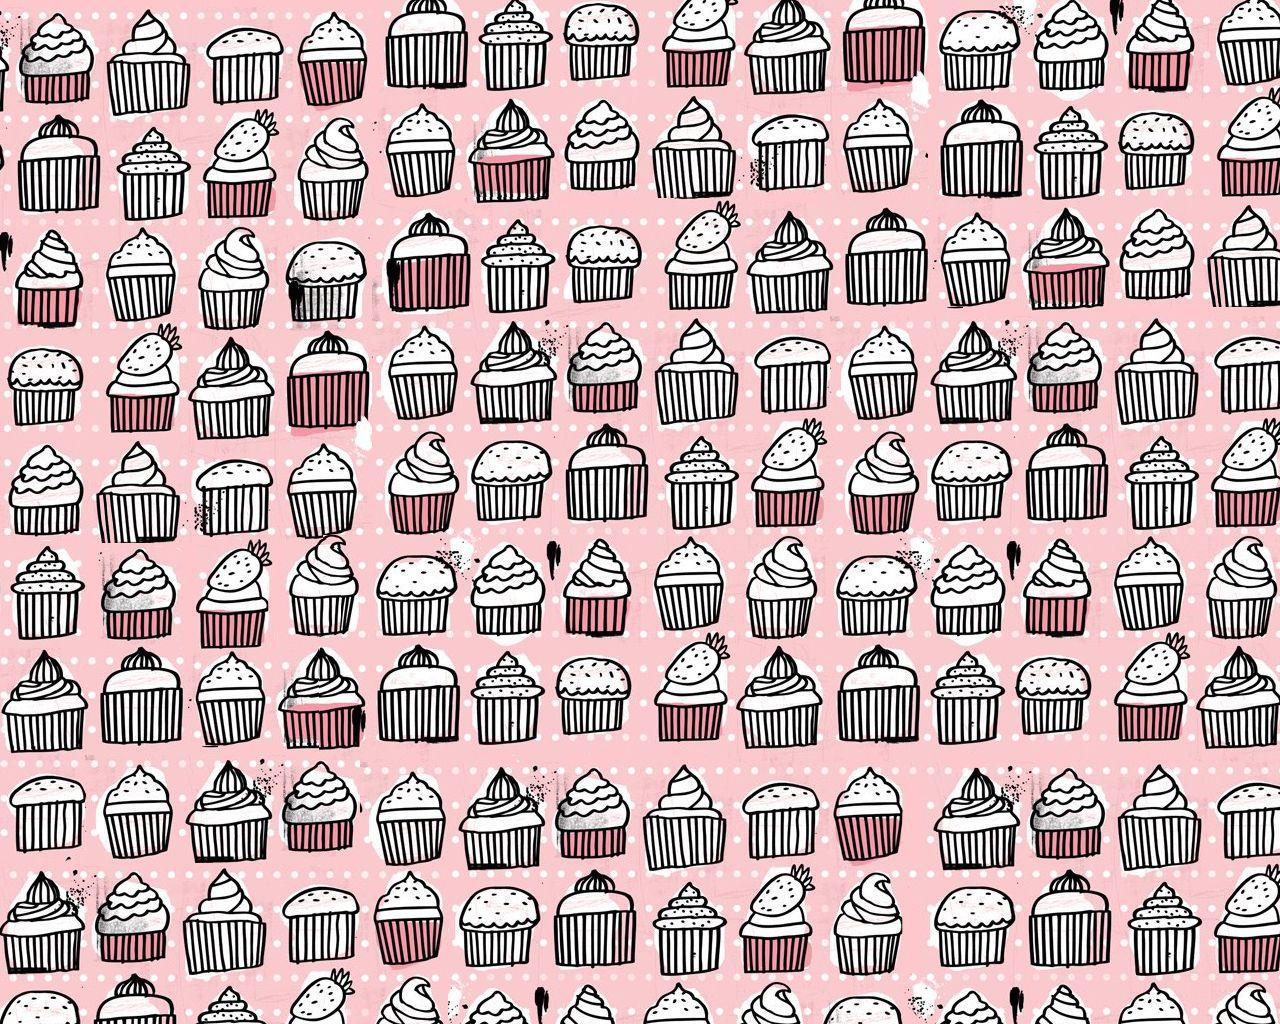 Cupcake Wallpaper and Desktop Background